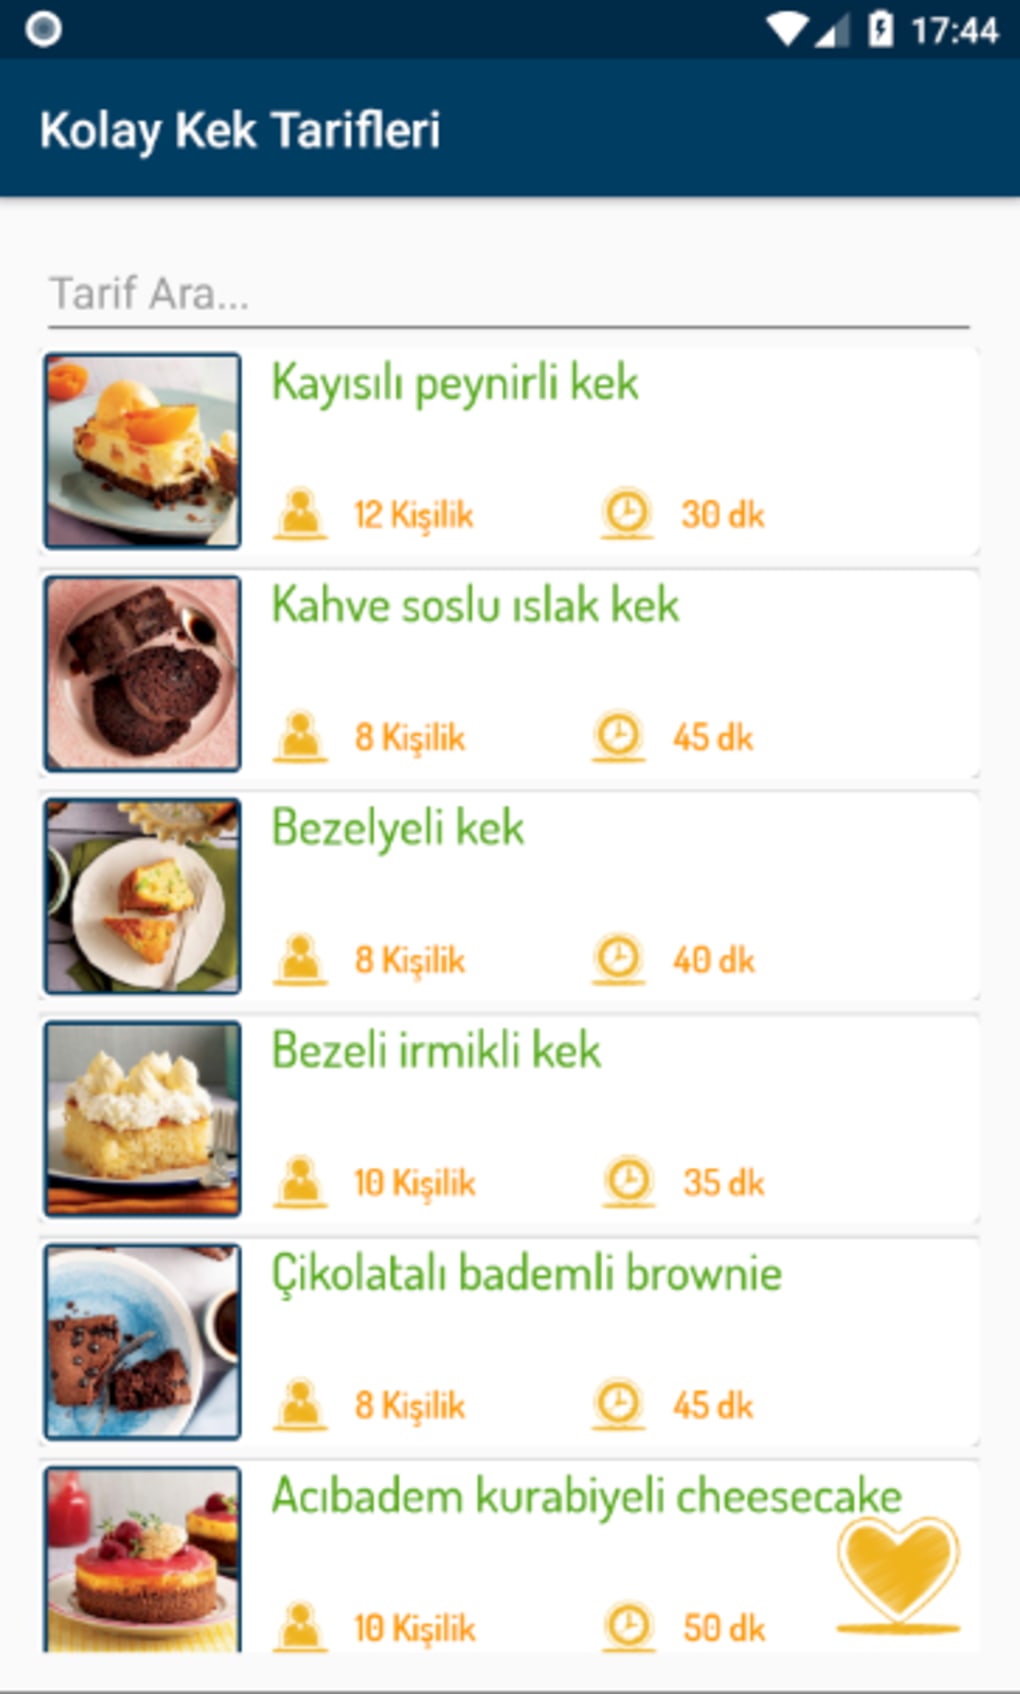 Pizza Papa Cipolla Praha – Apps no Google Play